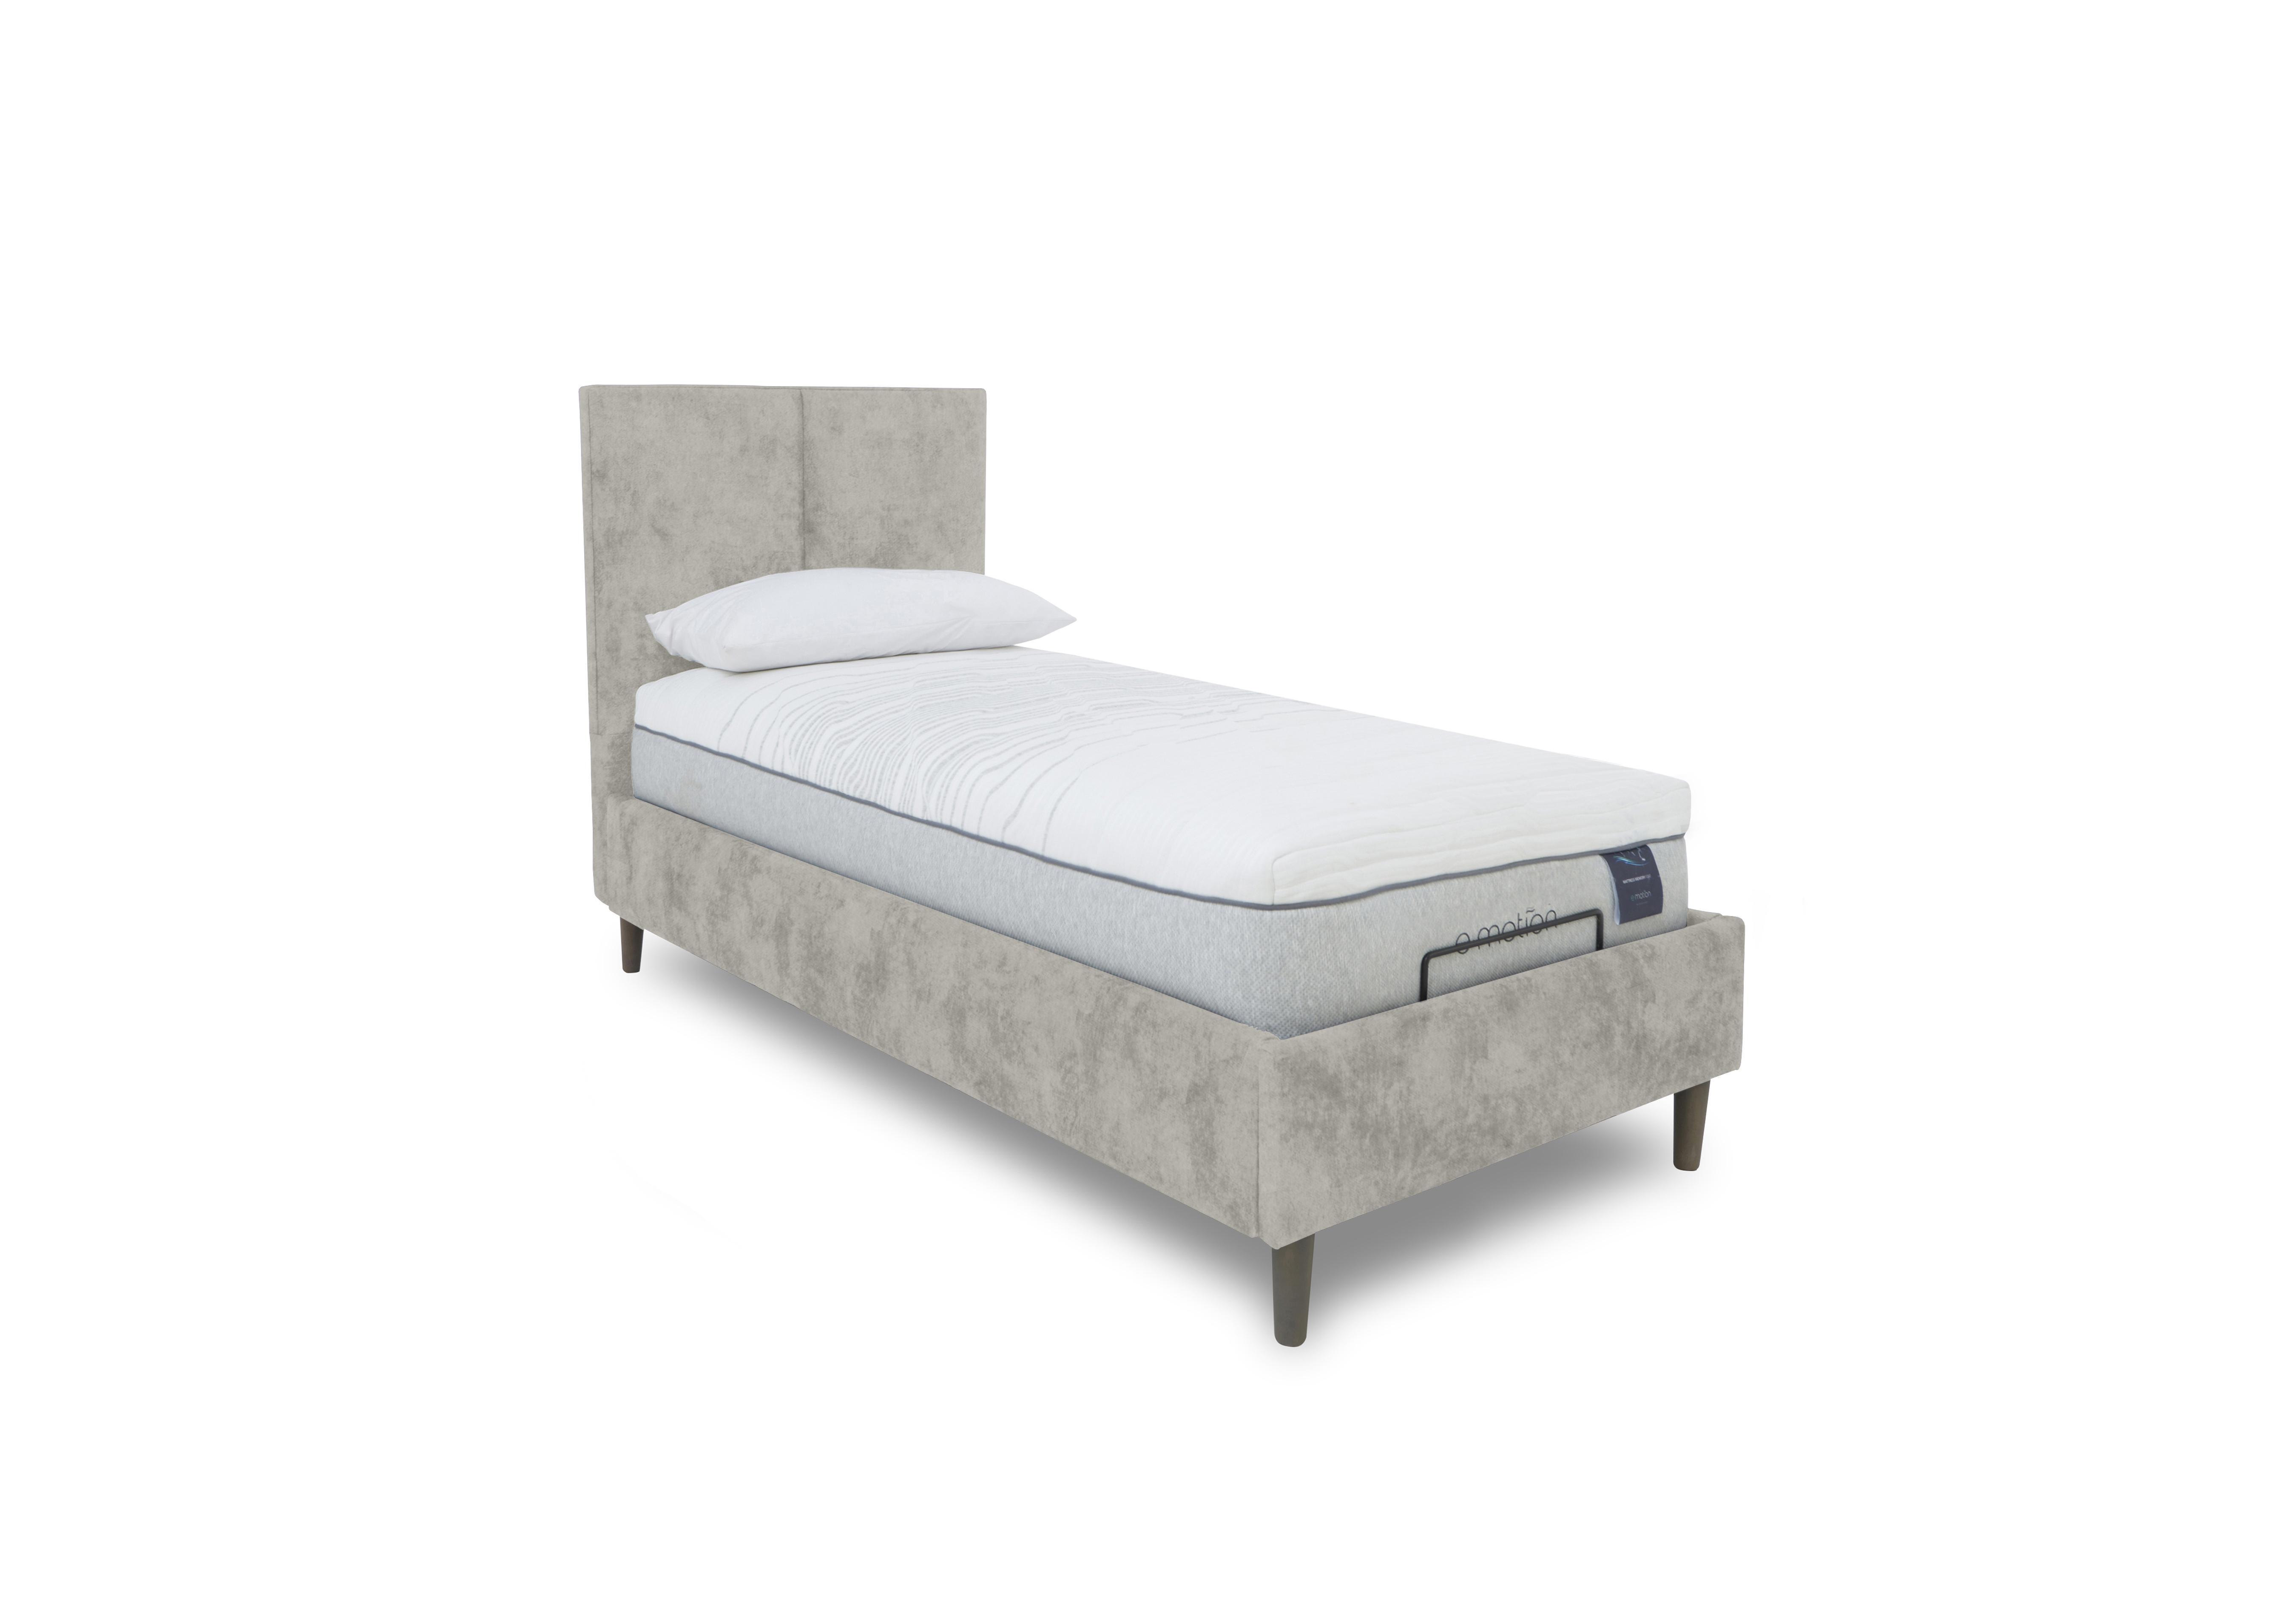 E-Motion Aiko Adjustable Bed Frame in Daytona Stone on Furniture Village